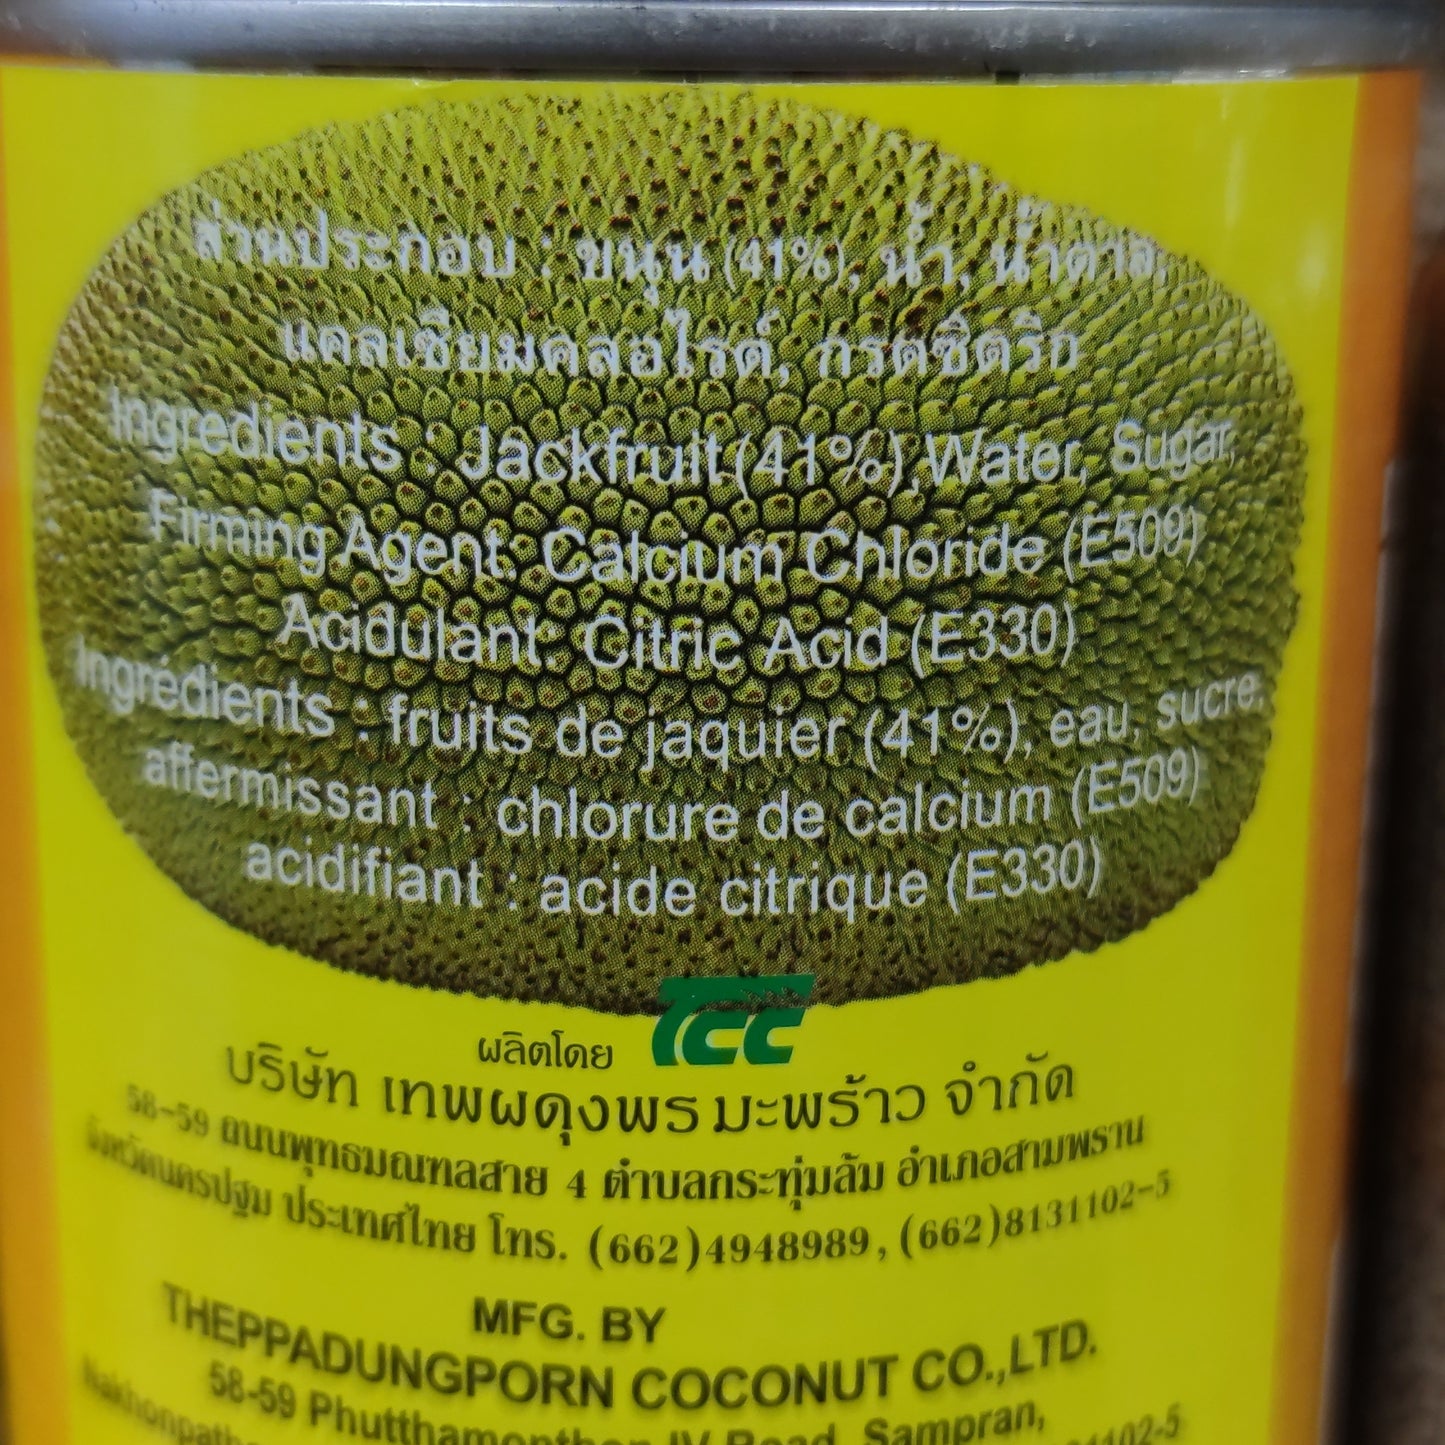 Chaokoh Jackfruit In Syrup 565g 查哥菠蘿蜜